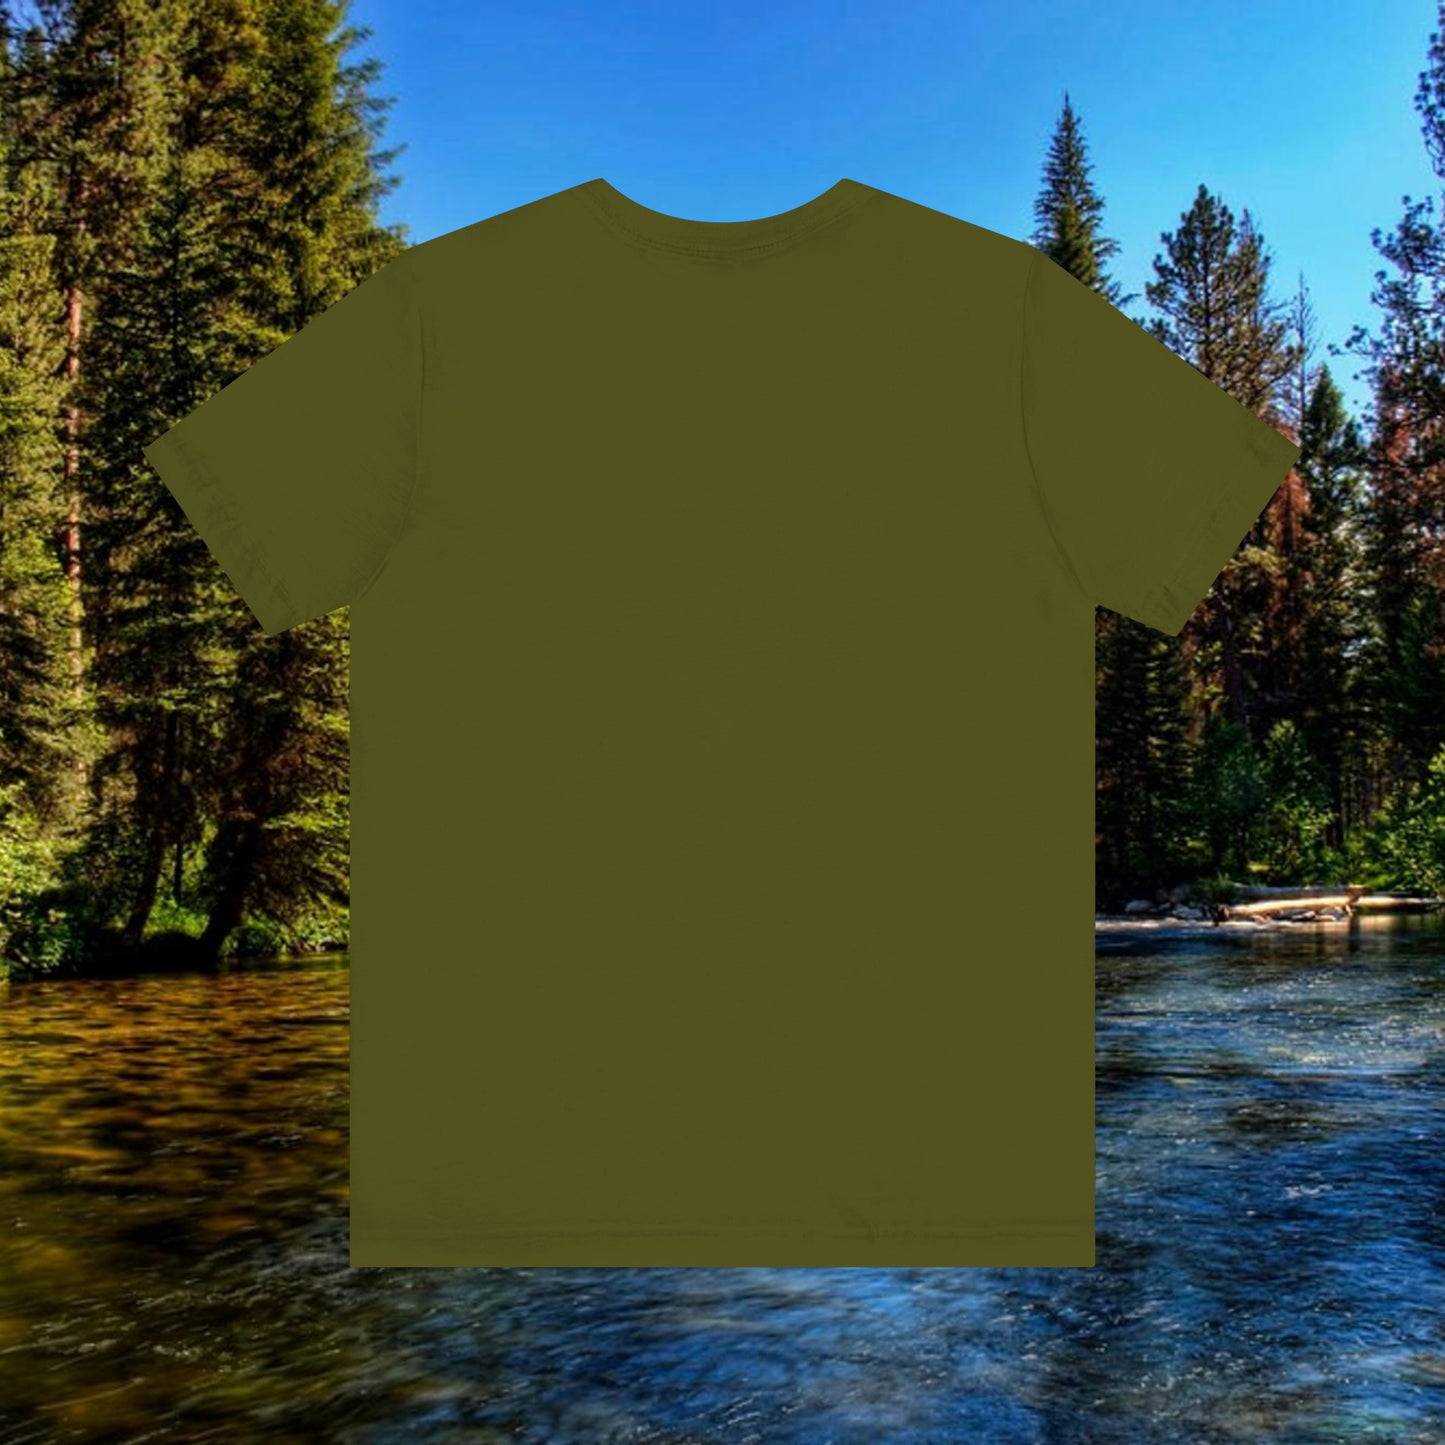 Flyfishing Short Sleeve Tee, Fishing Shirt, Trout T-shirt,  Gift for Fisherman